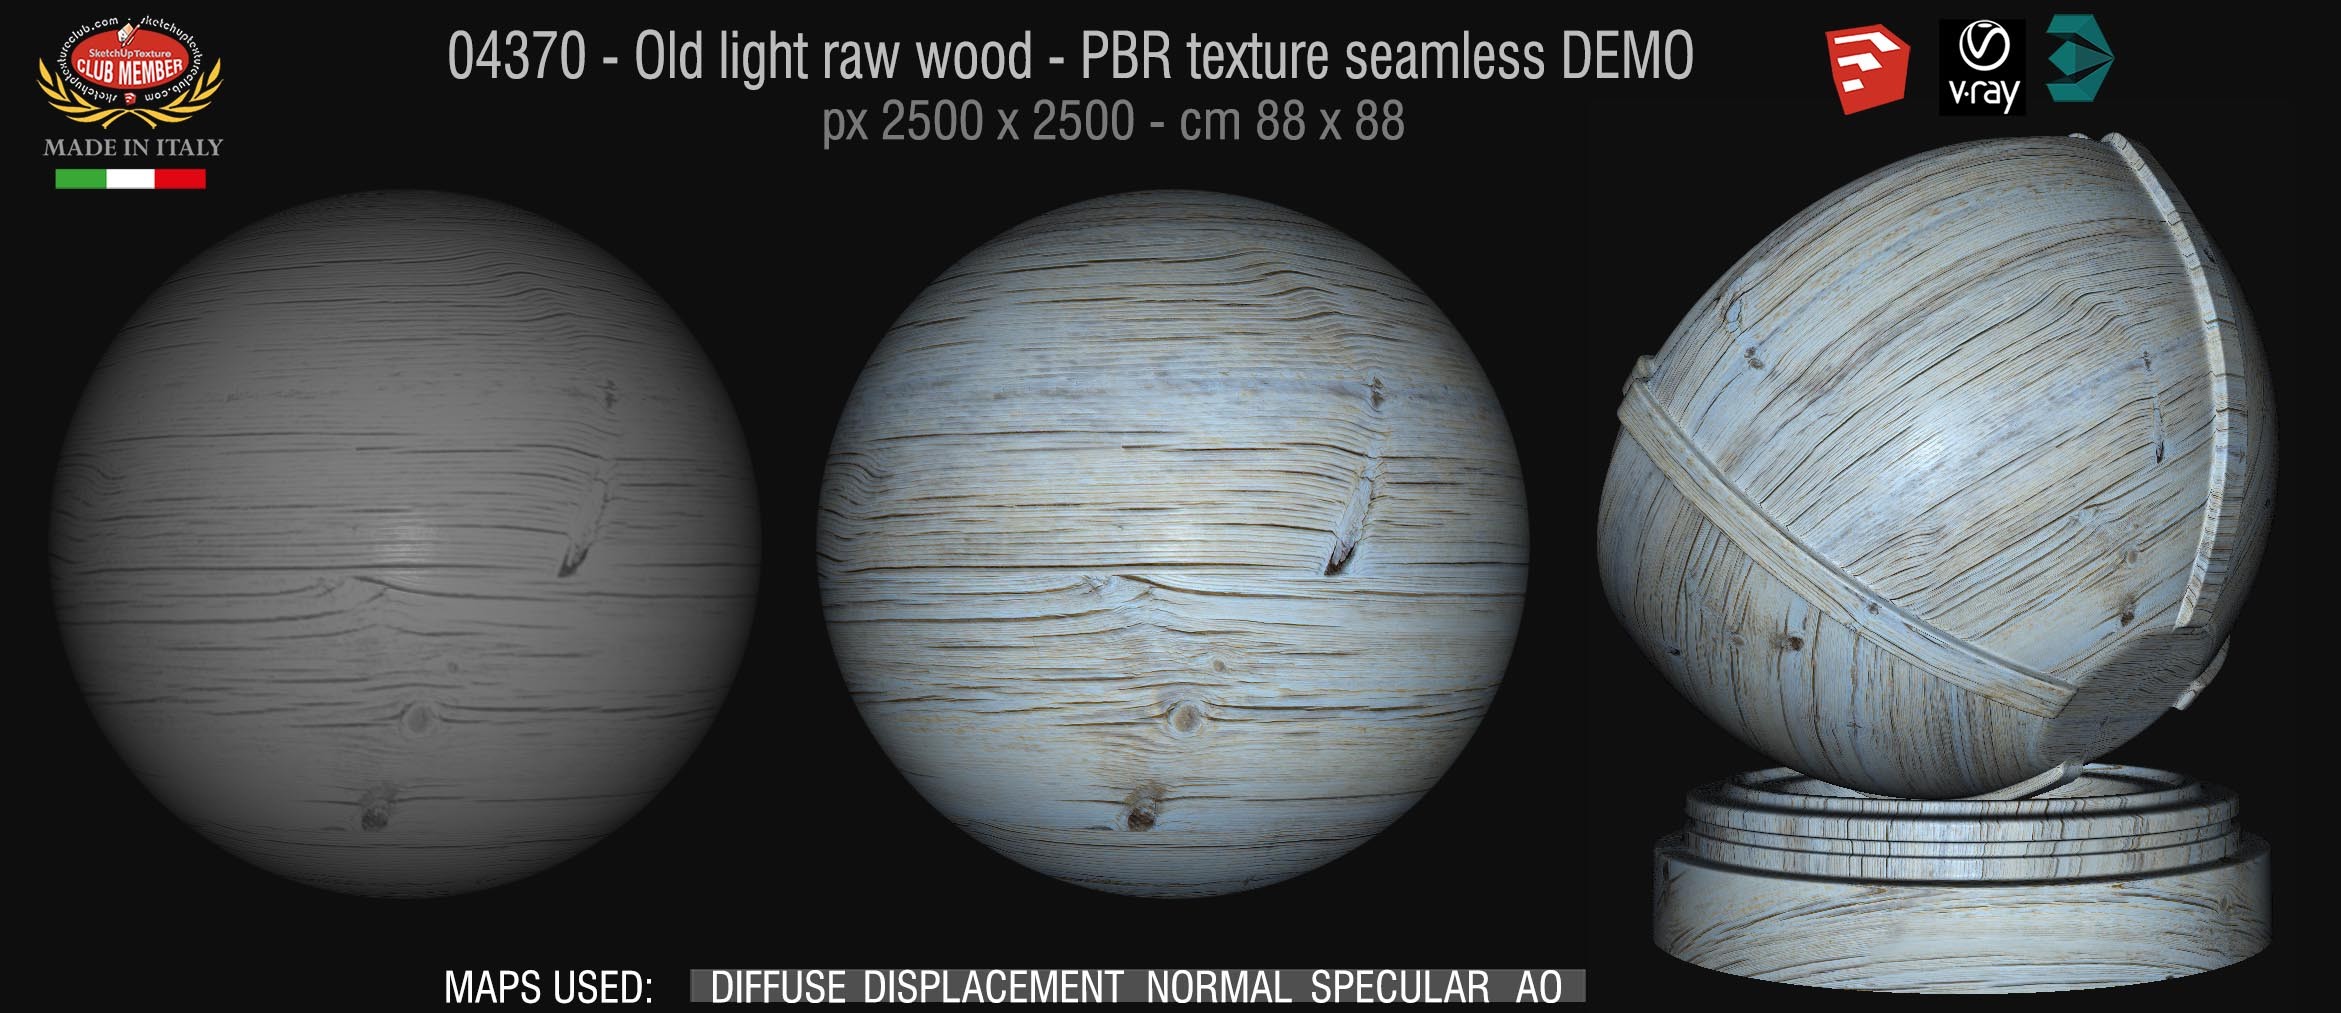 04370 Old light raw wood - PBR texture seamless DEMO